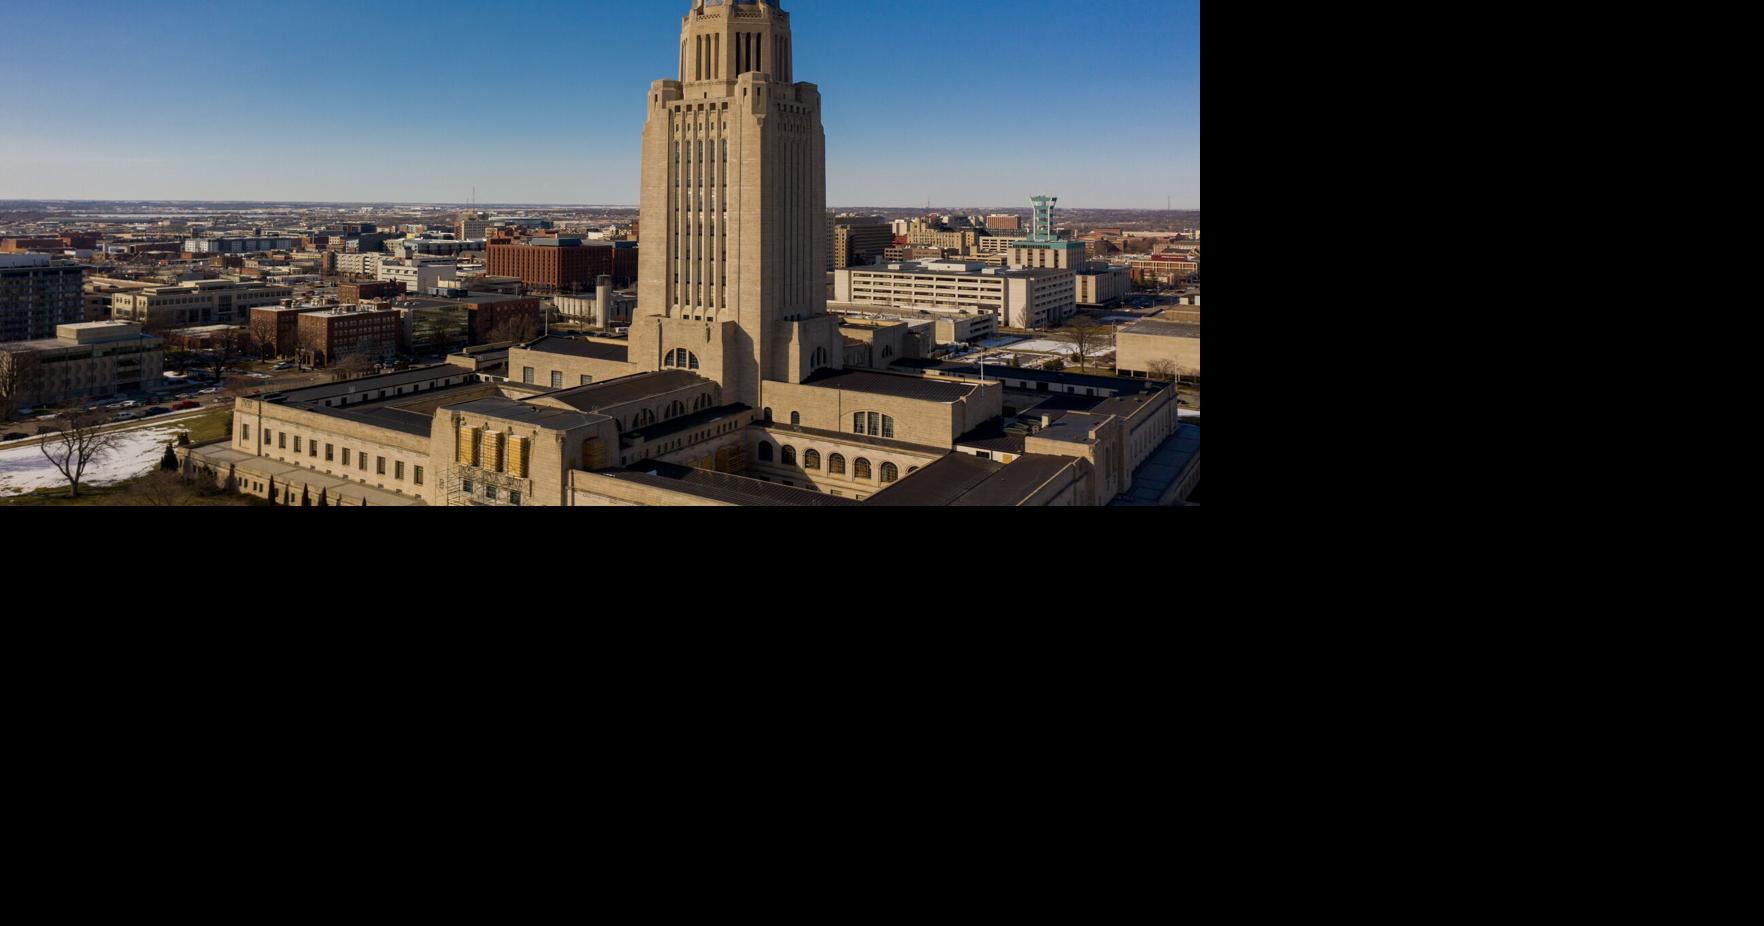 Nebraska officials delay selection of contractors managing $1.8 billion program